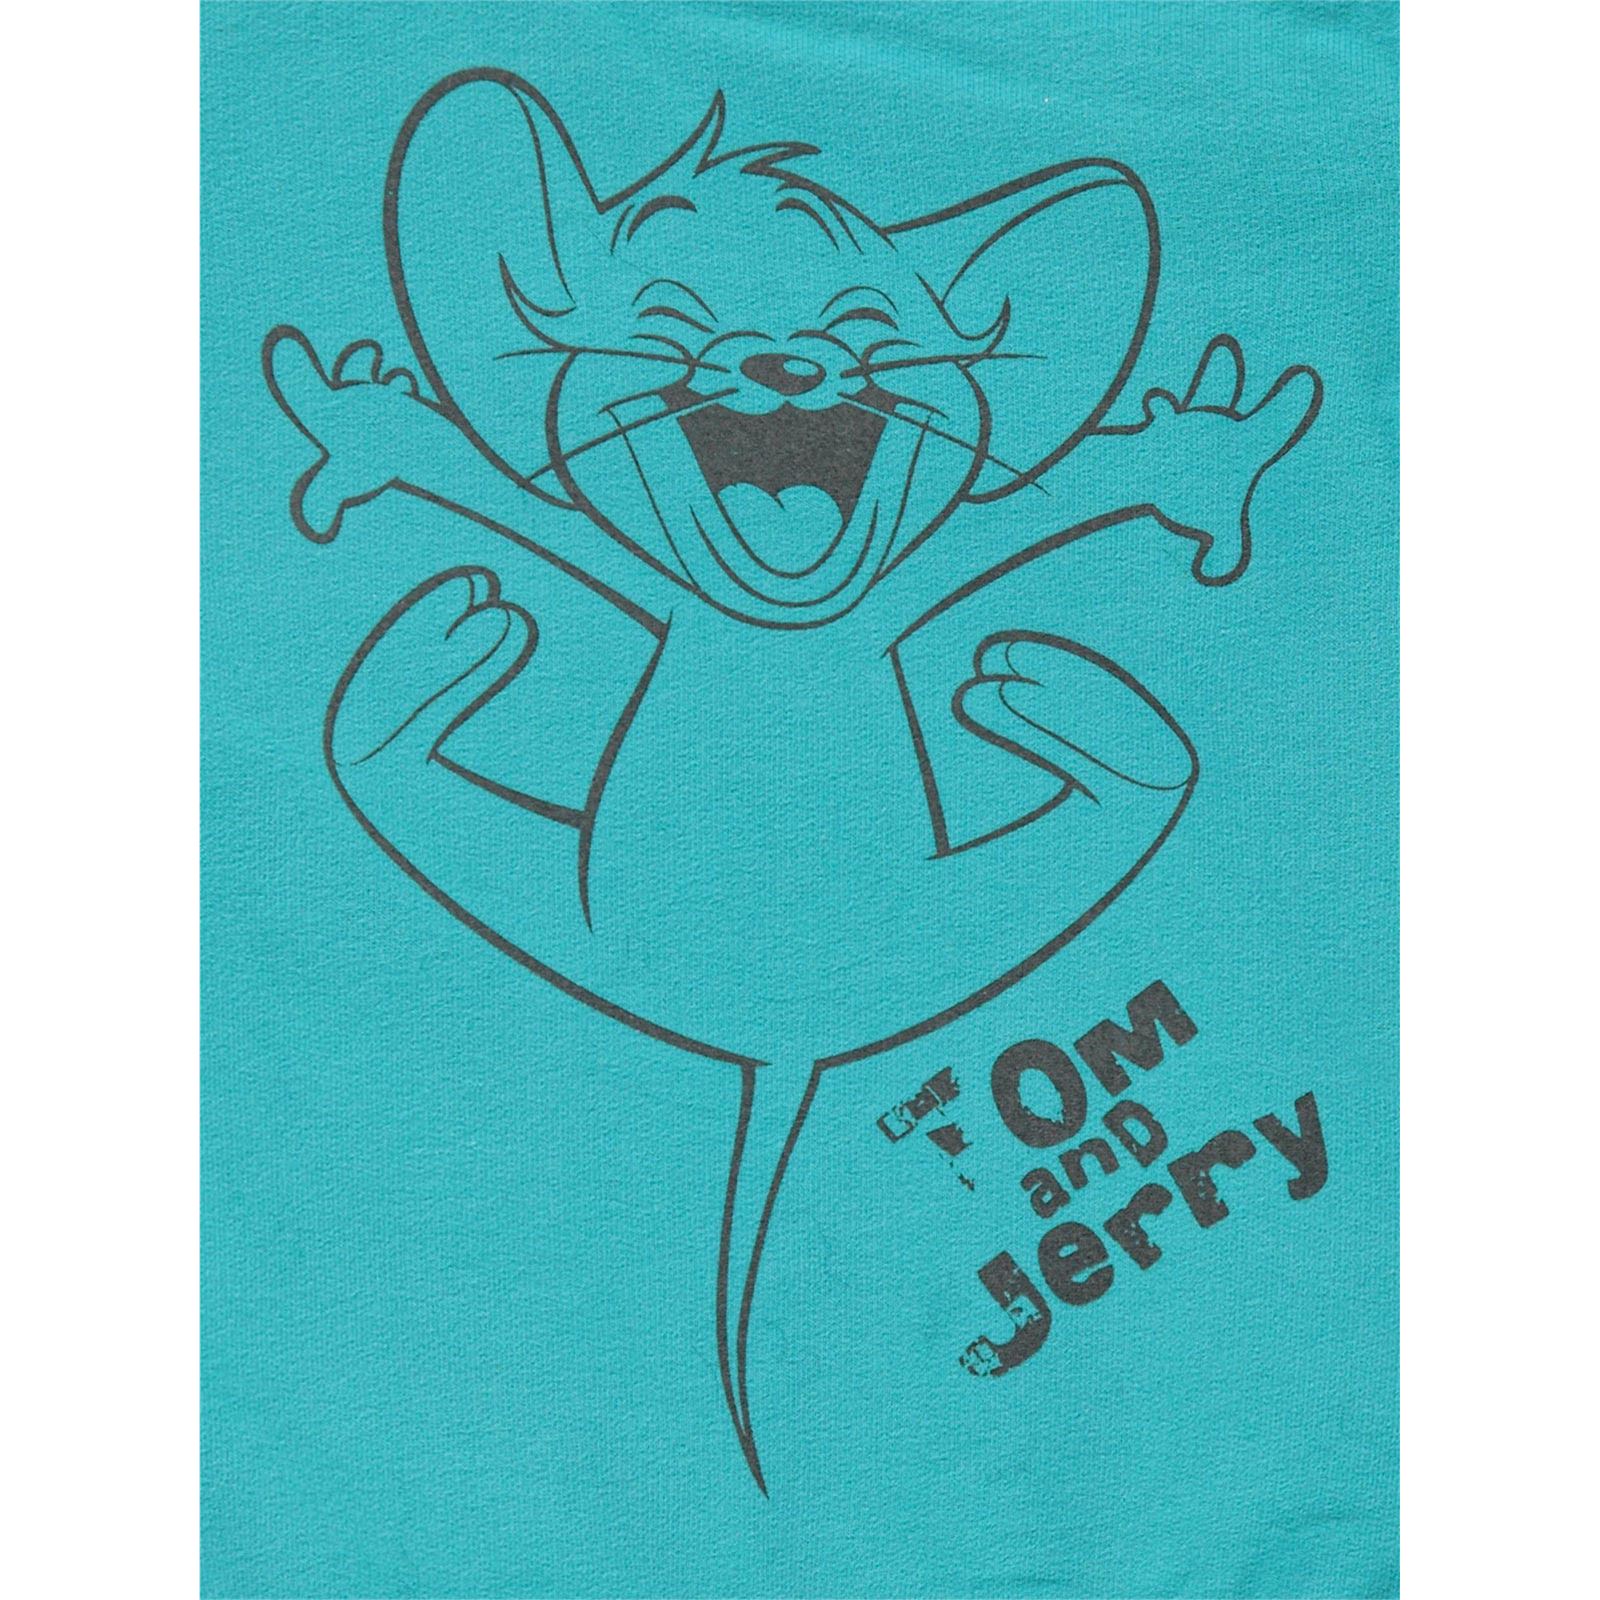 Tom And Jerry Erkek Bebek Sweatshirt 6-18 Ay Koyu Mint